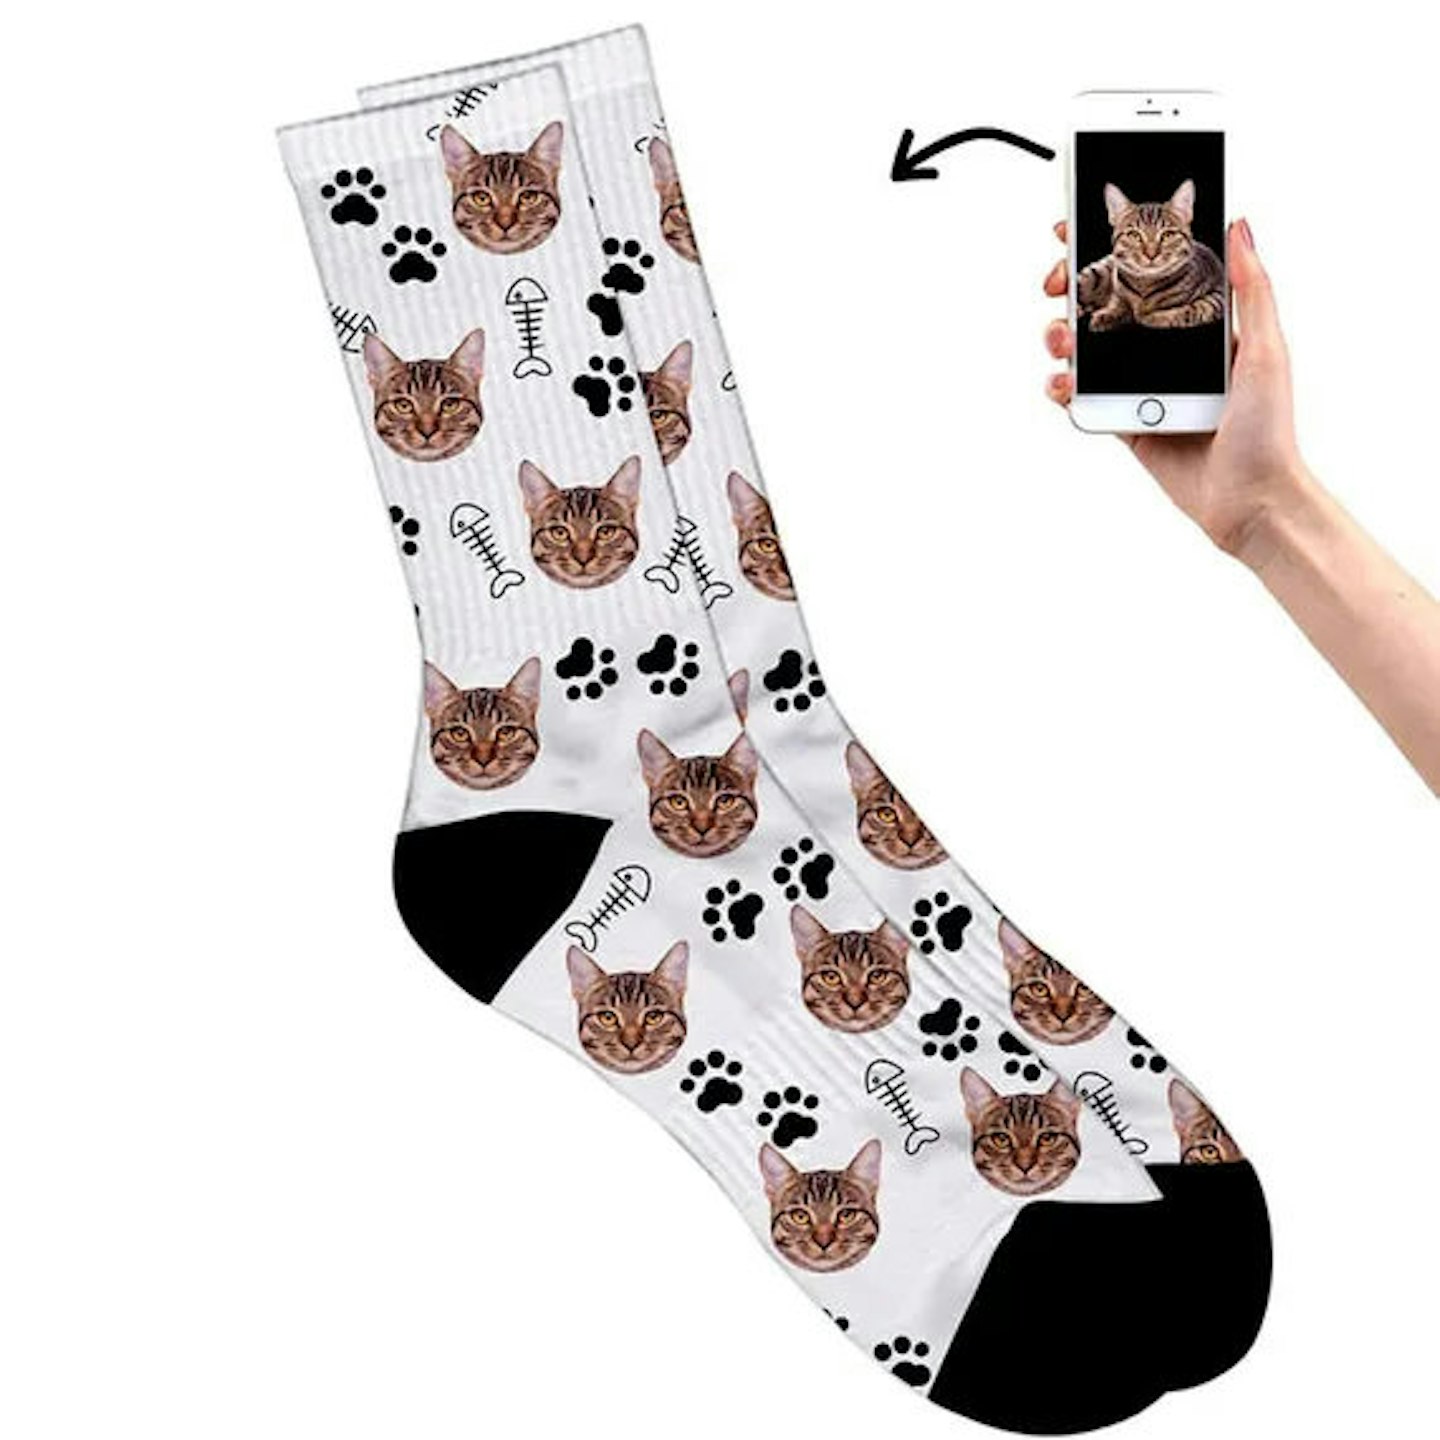 Personalised cat socks